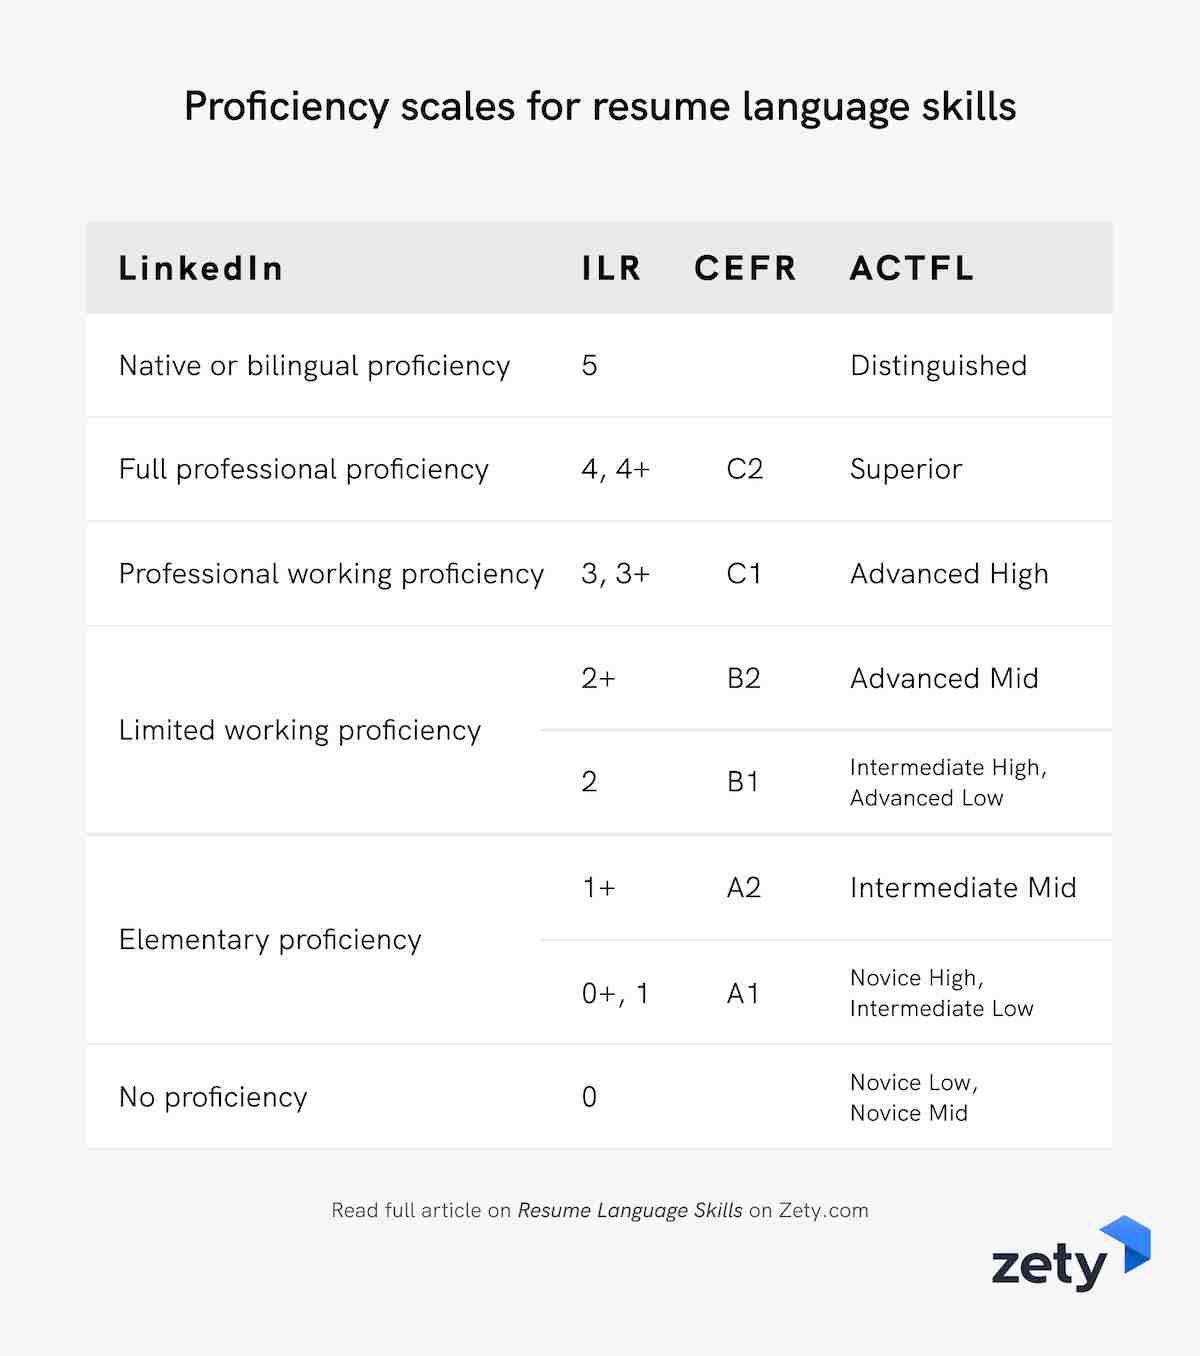 Proficiency scales for resume language skills